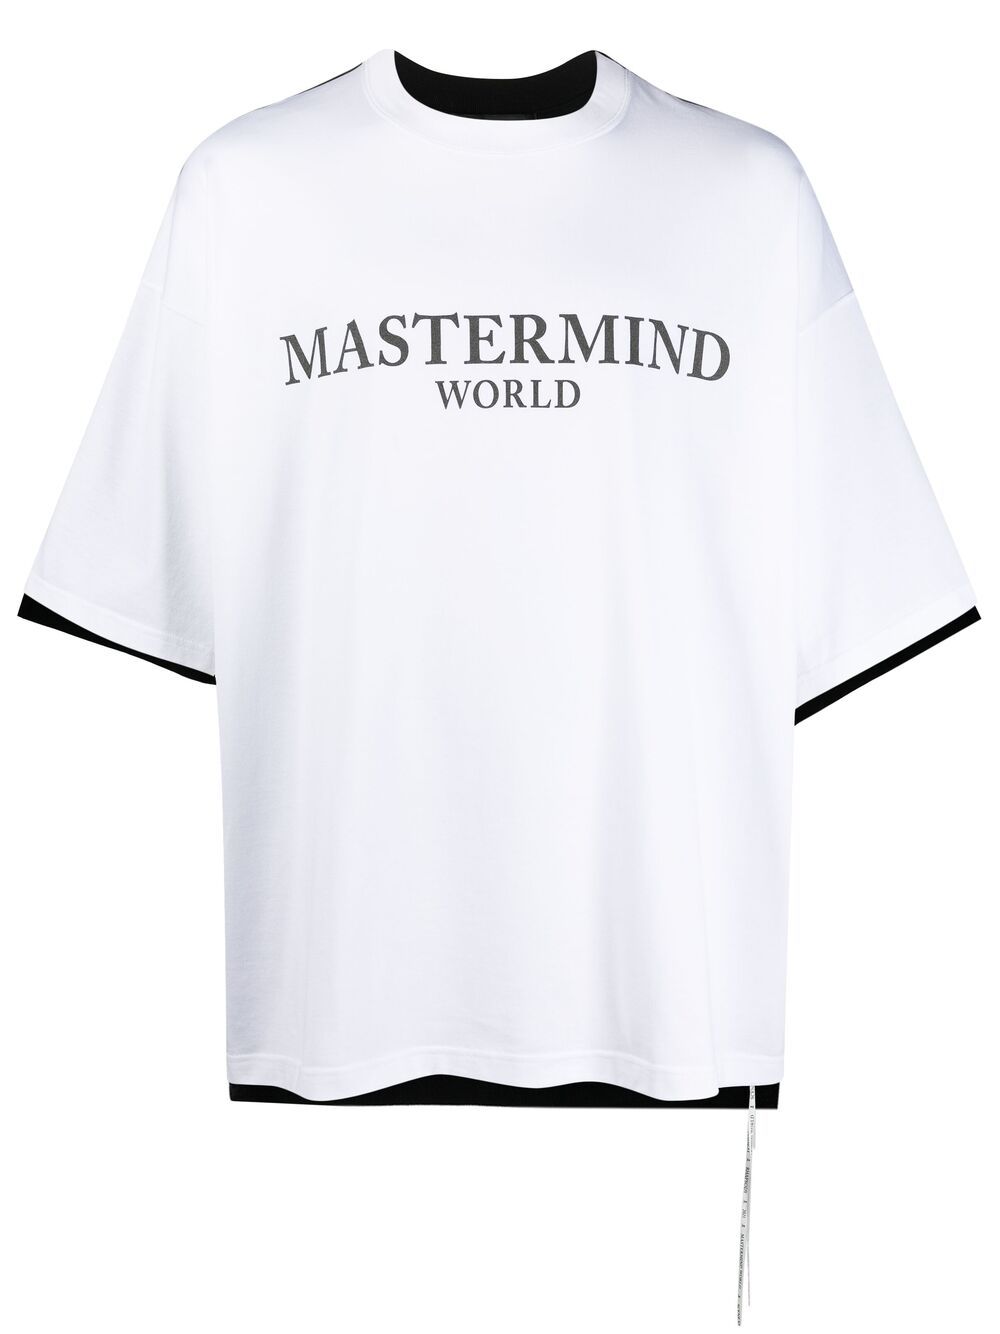 фото Mastermind world футболка оверсайз с контрастной вставкой